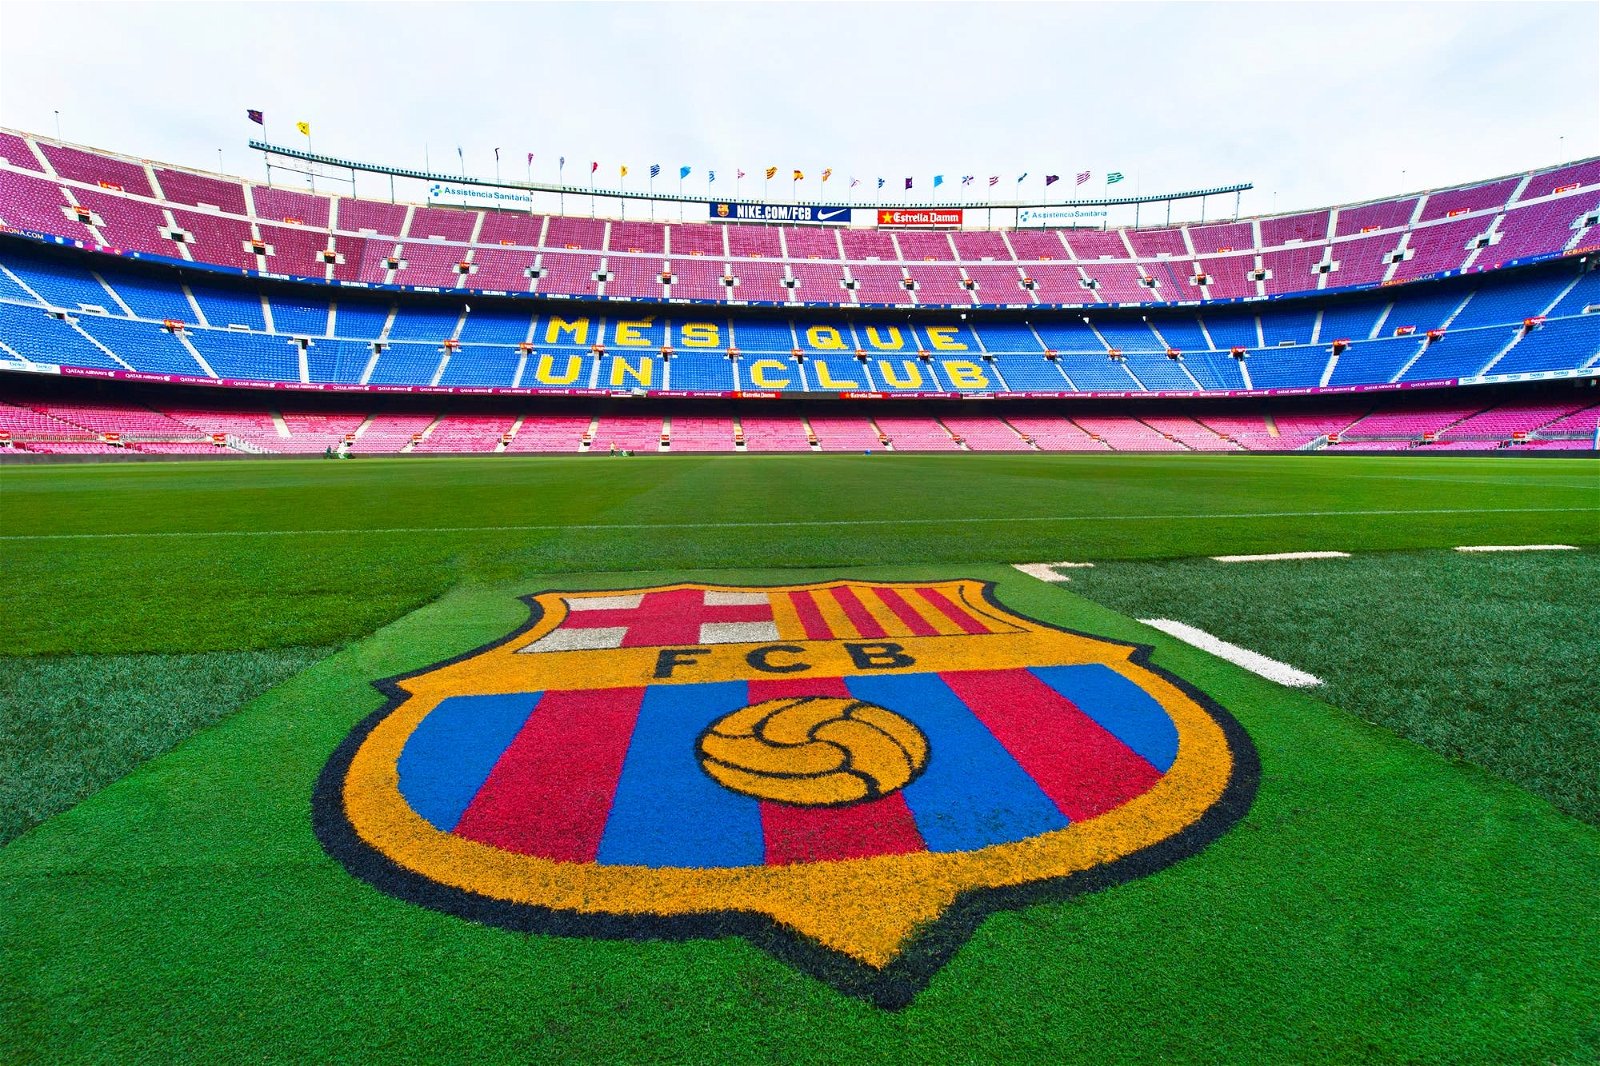 Barcelona stadium 2021: Camp Nou Barca Home Arena Name & Capacity!